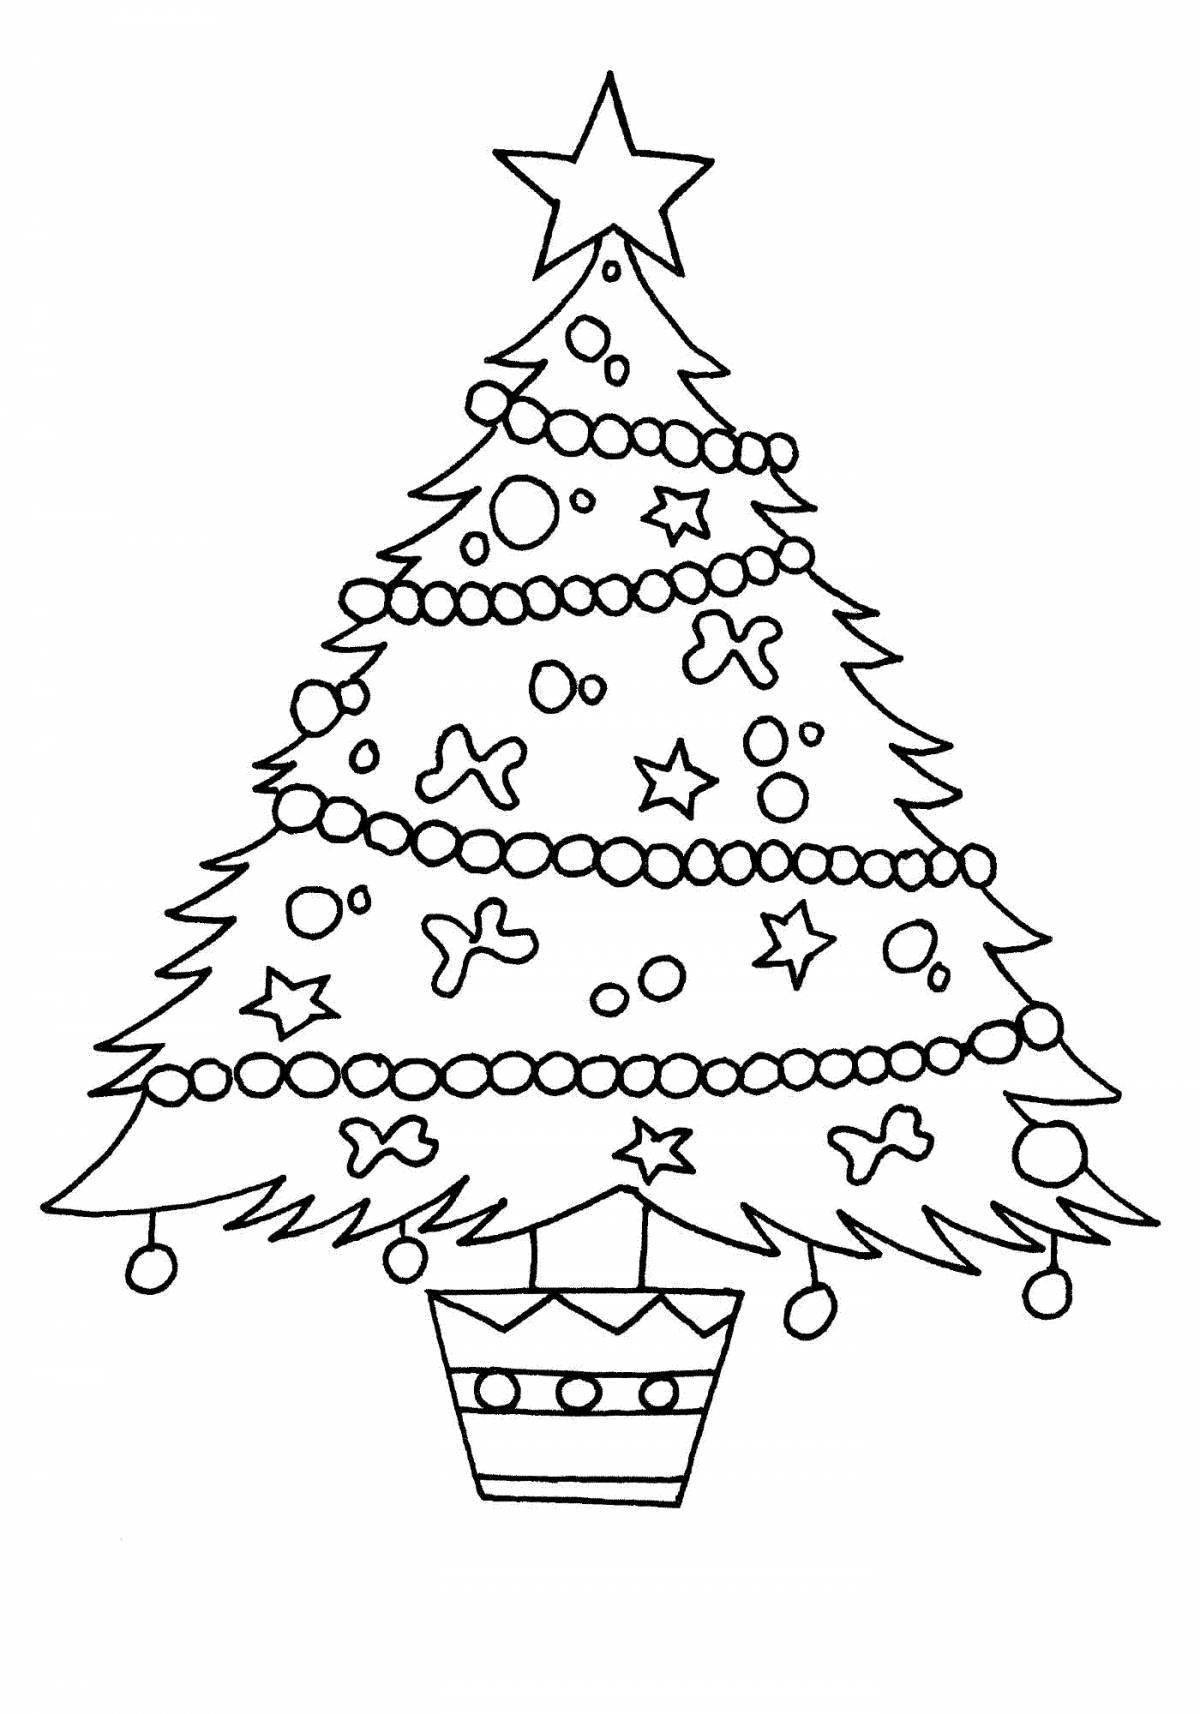 Elegant Christmas tree coloring book